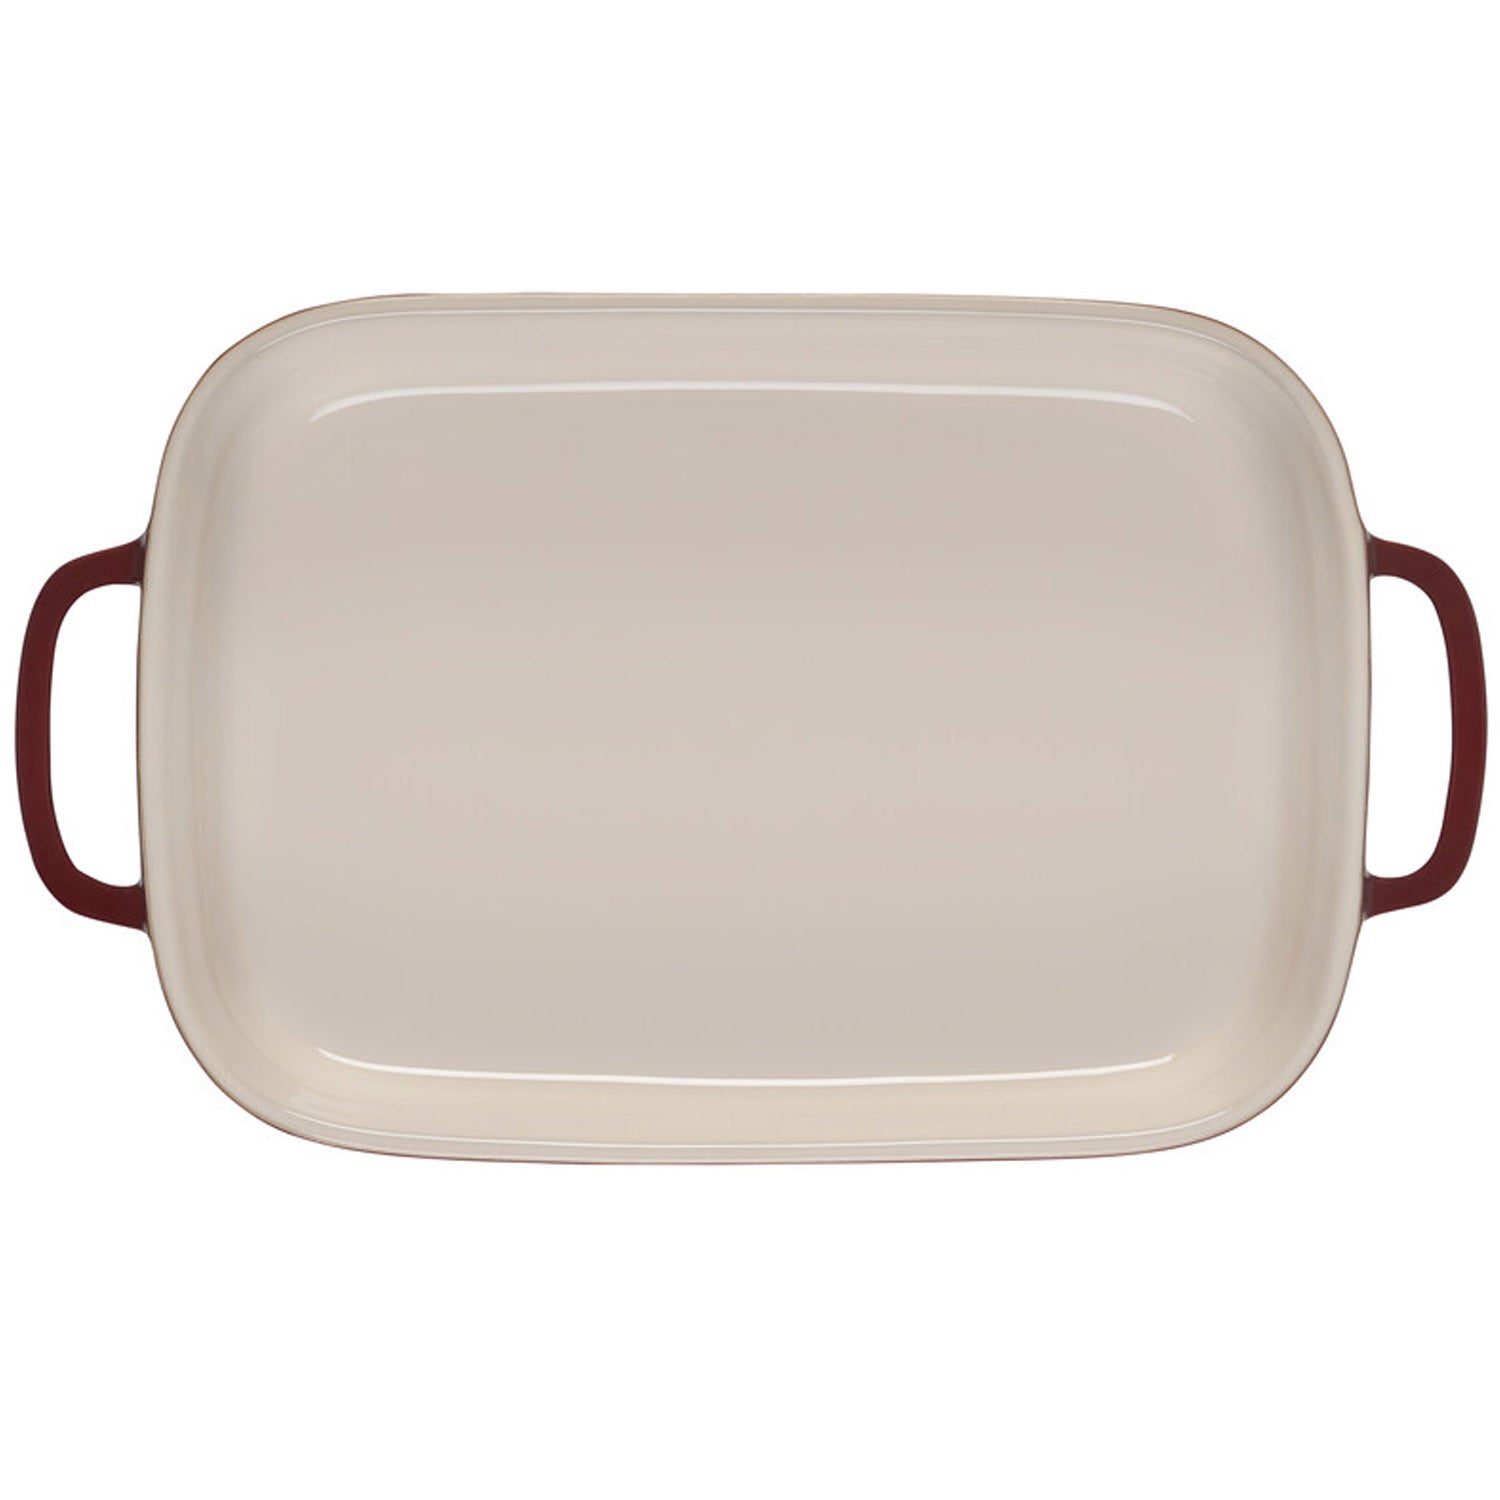 Le Creuset Heritage Stoneware Rectangular Dish w/ Platter Lid